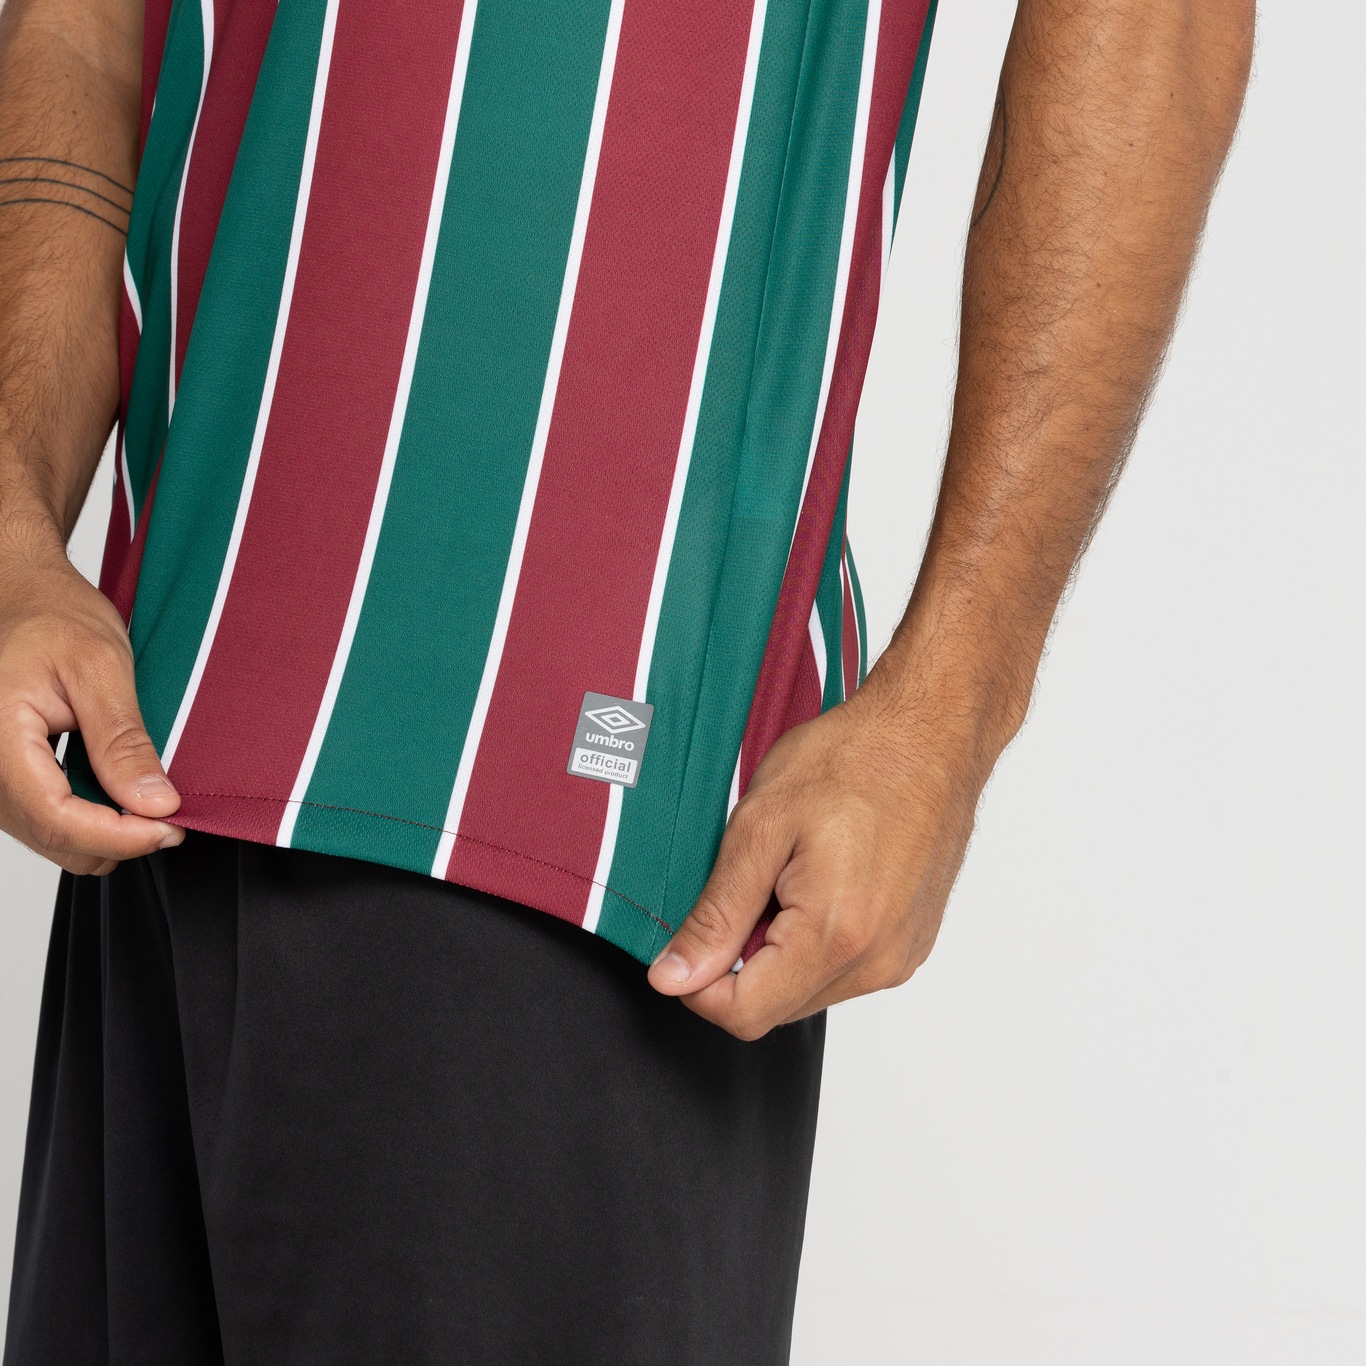 Camisa do Fluminense I 23 Masculina Umbro  - Foto 4